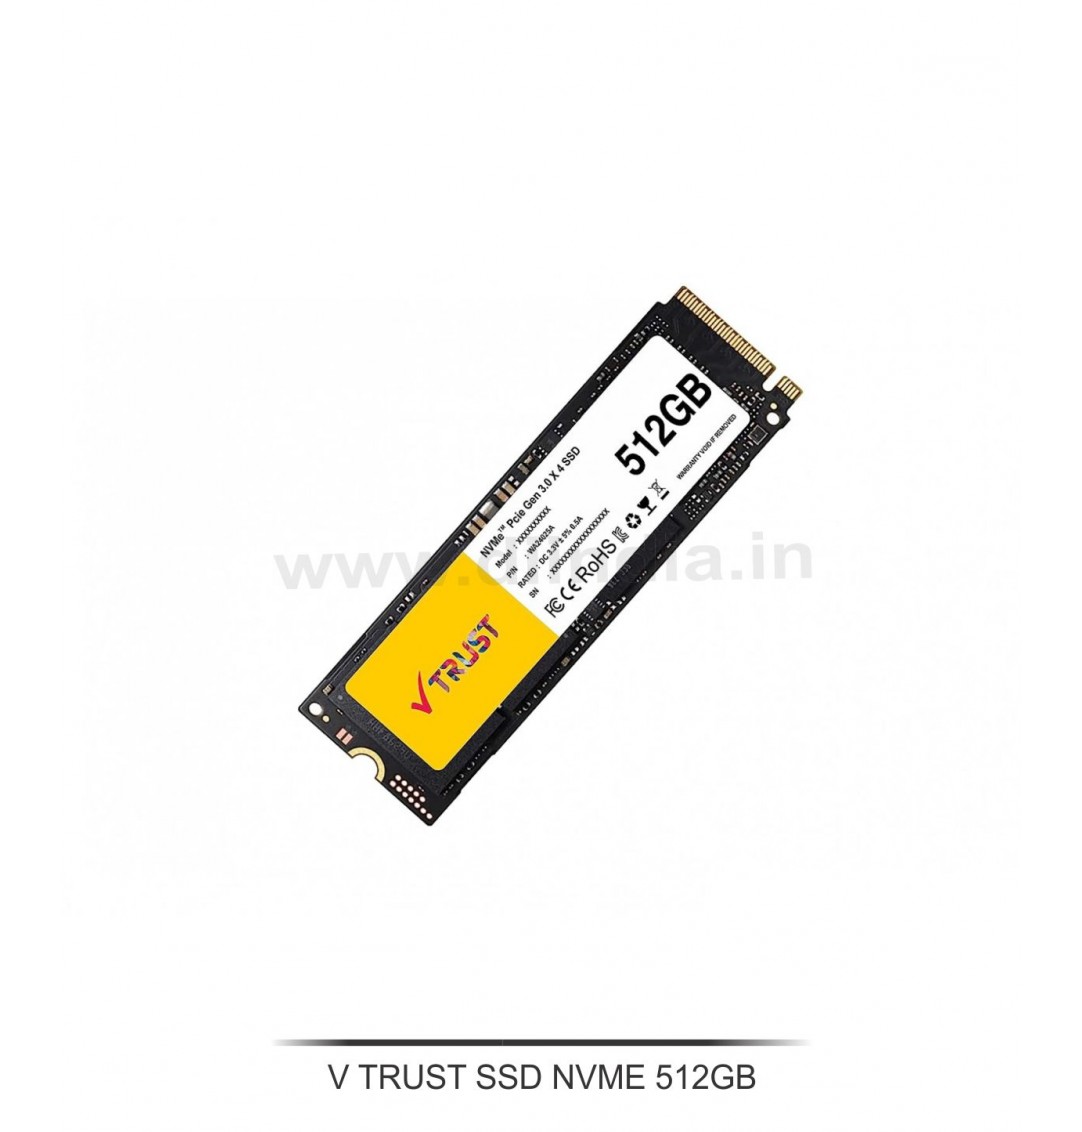 V TRUST SSD NVME 512GB ( INCLUDING GST )